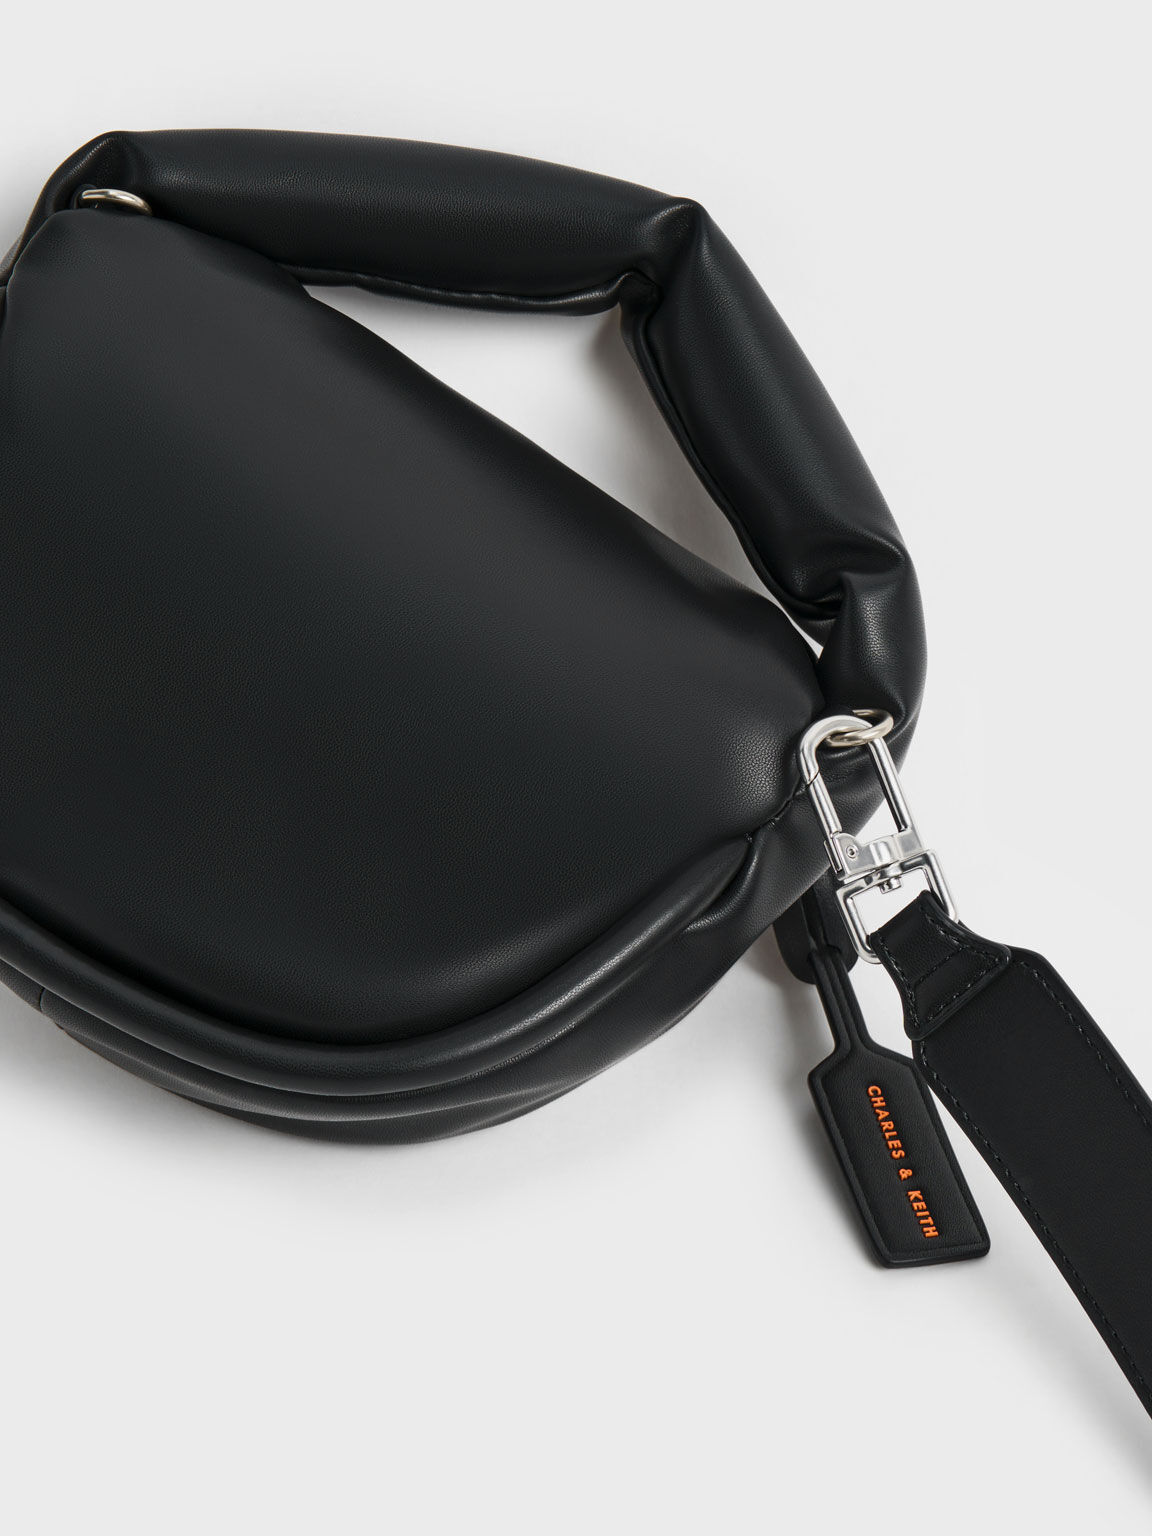 Yama Padded Handle Bag, Black, hi-res